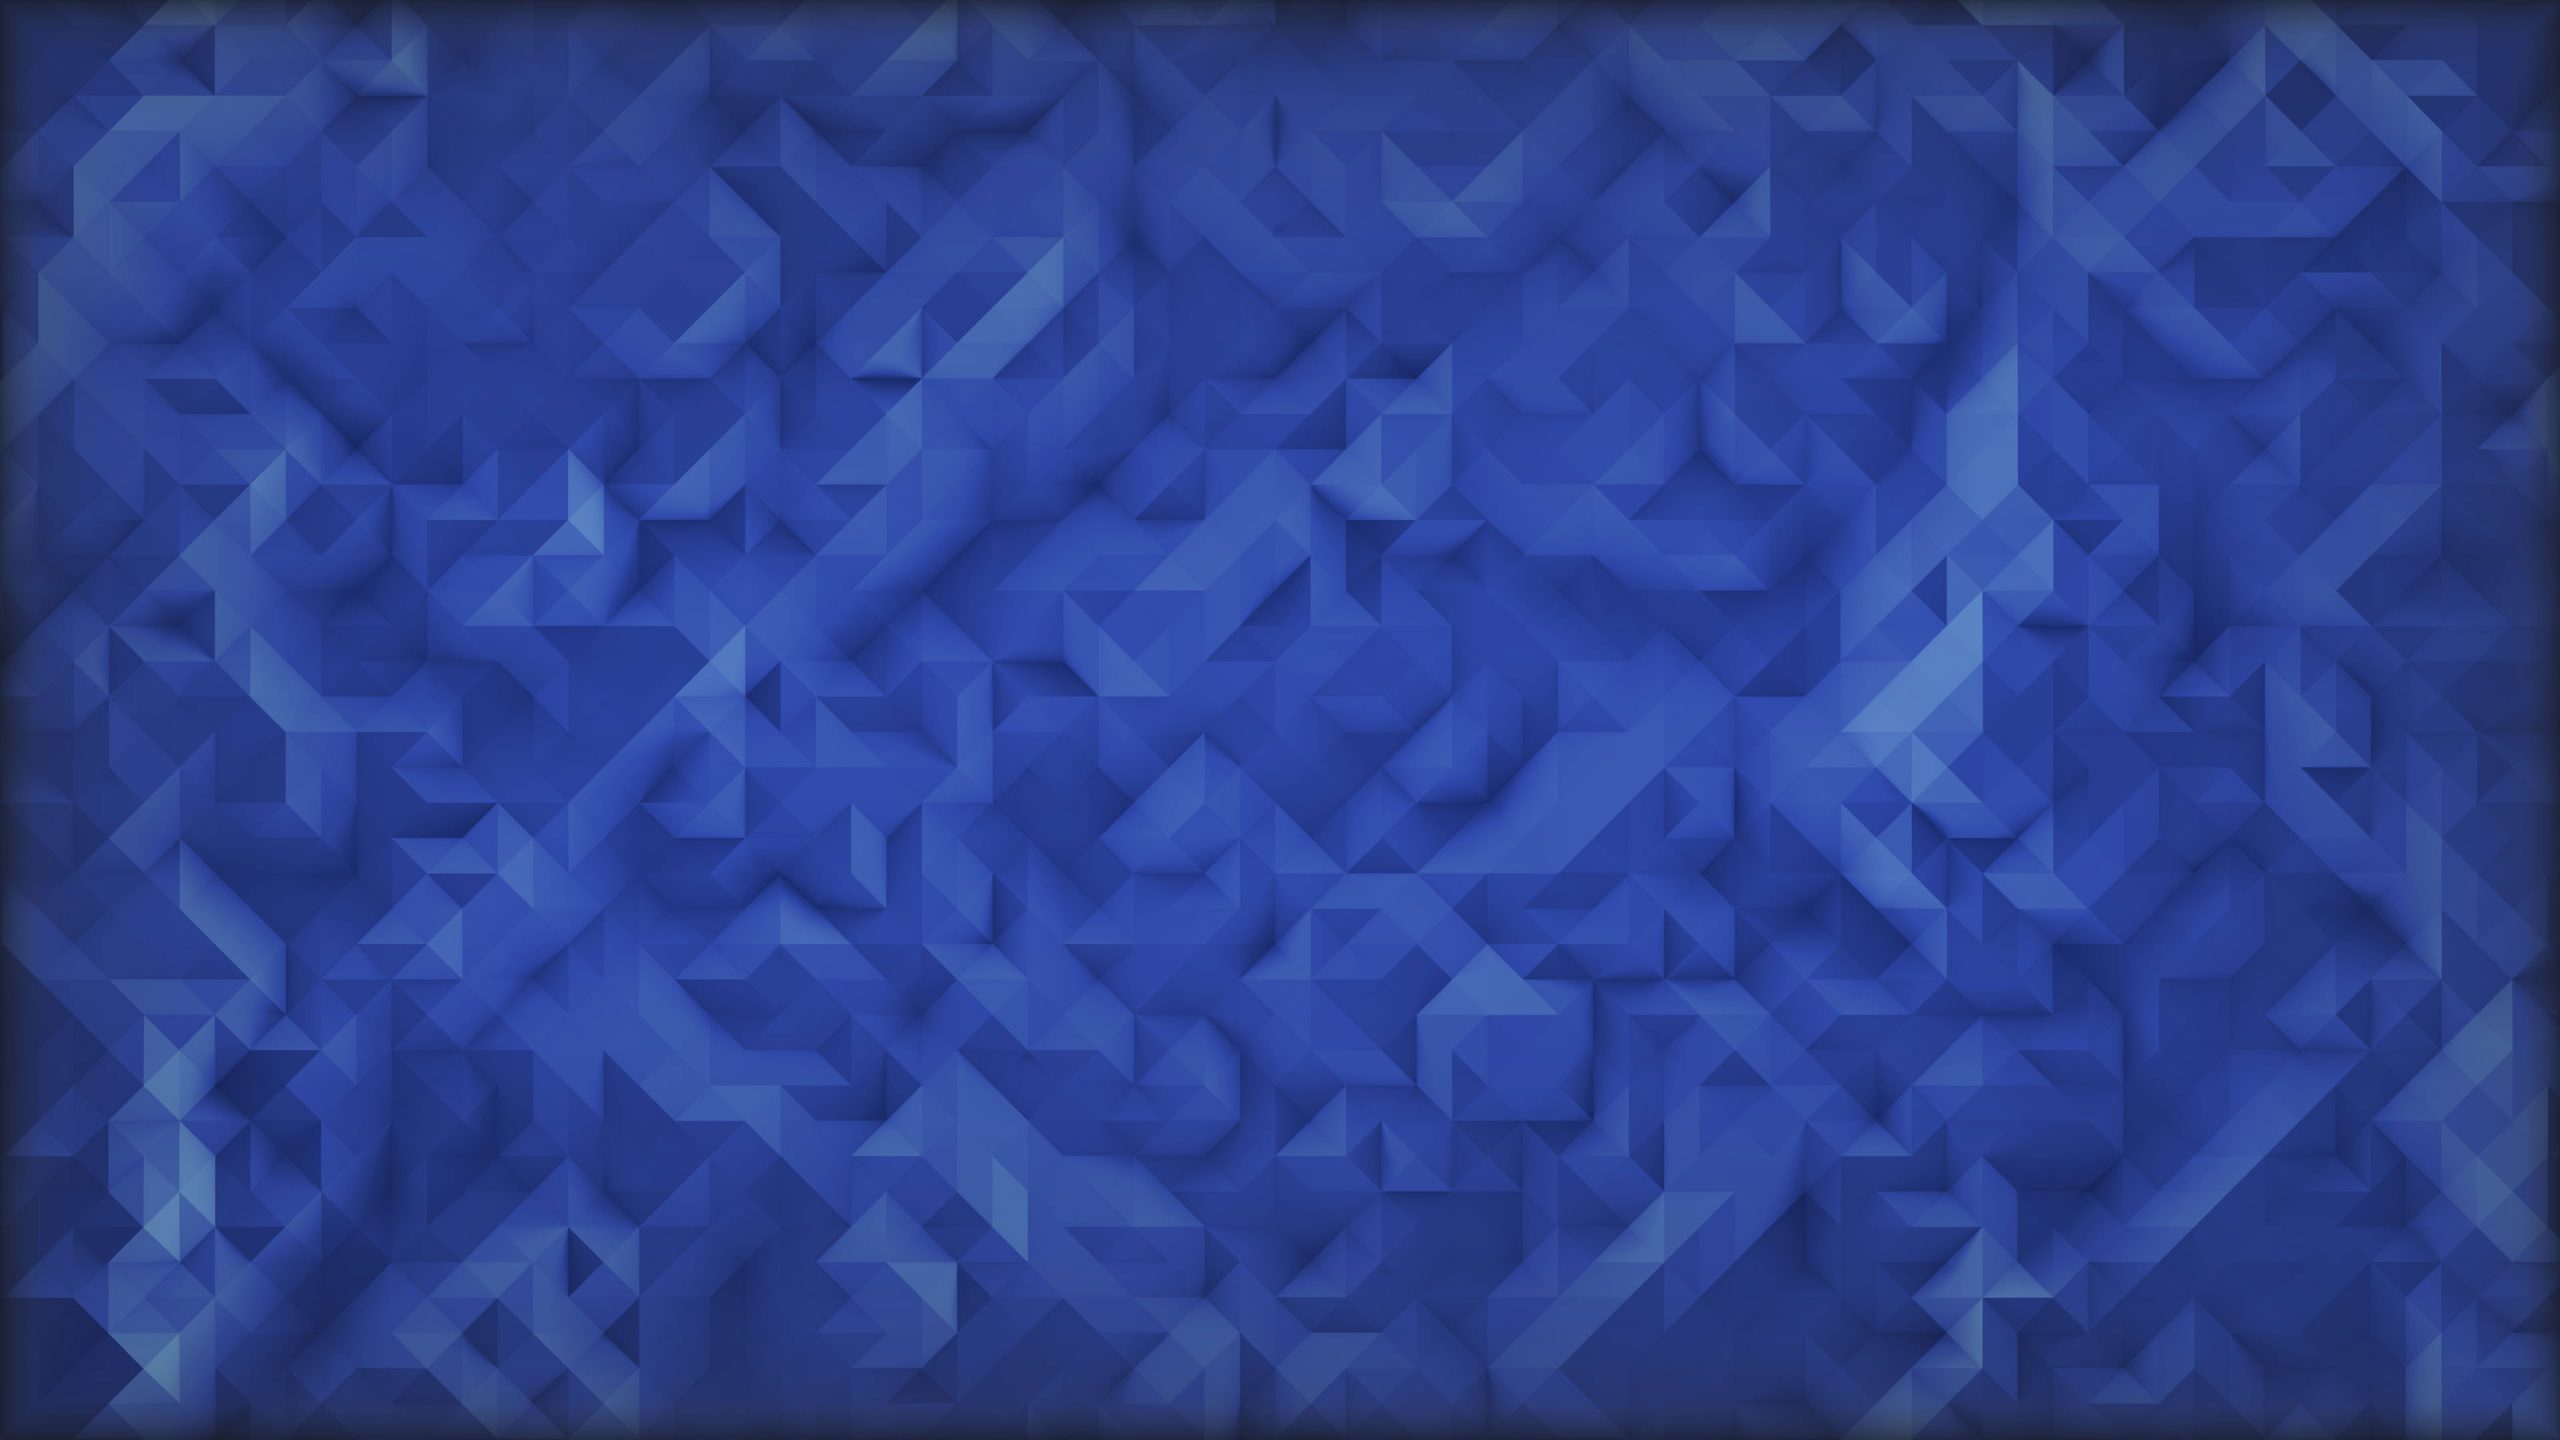 Polygon wallpaper, blue digital wallpaper, digital art, low poly, minimalism, 2D